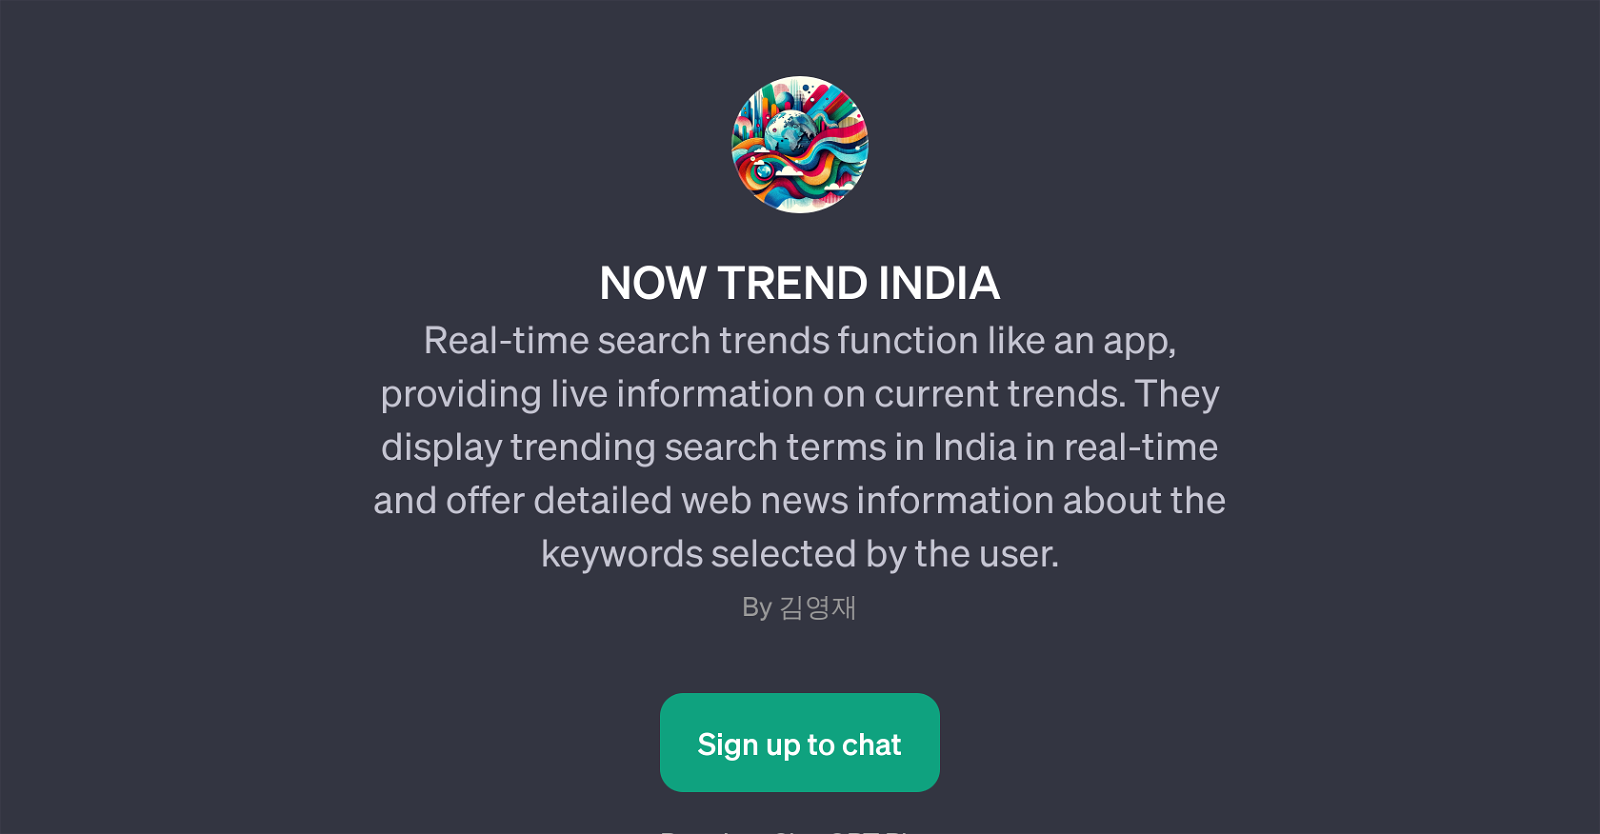 NOW TREND INDIA website